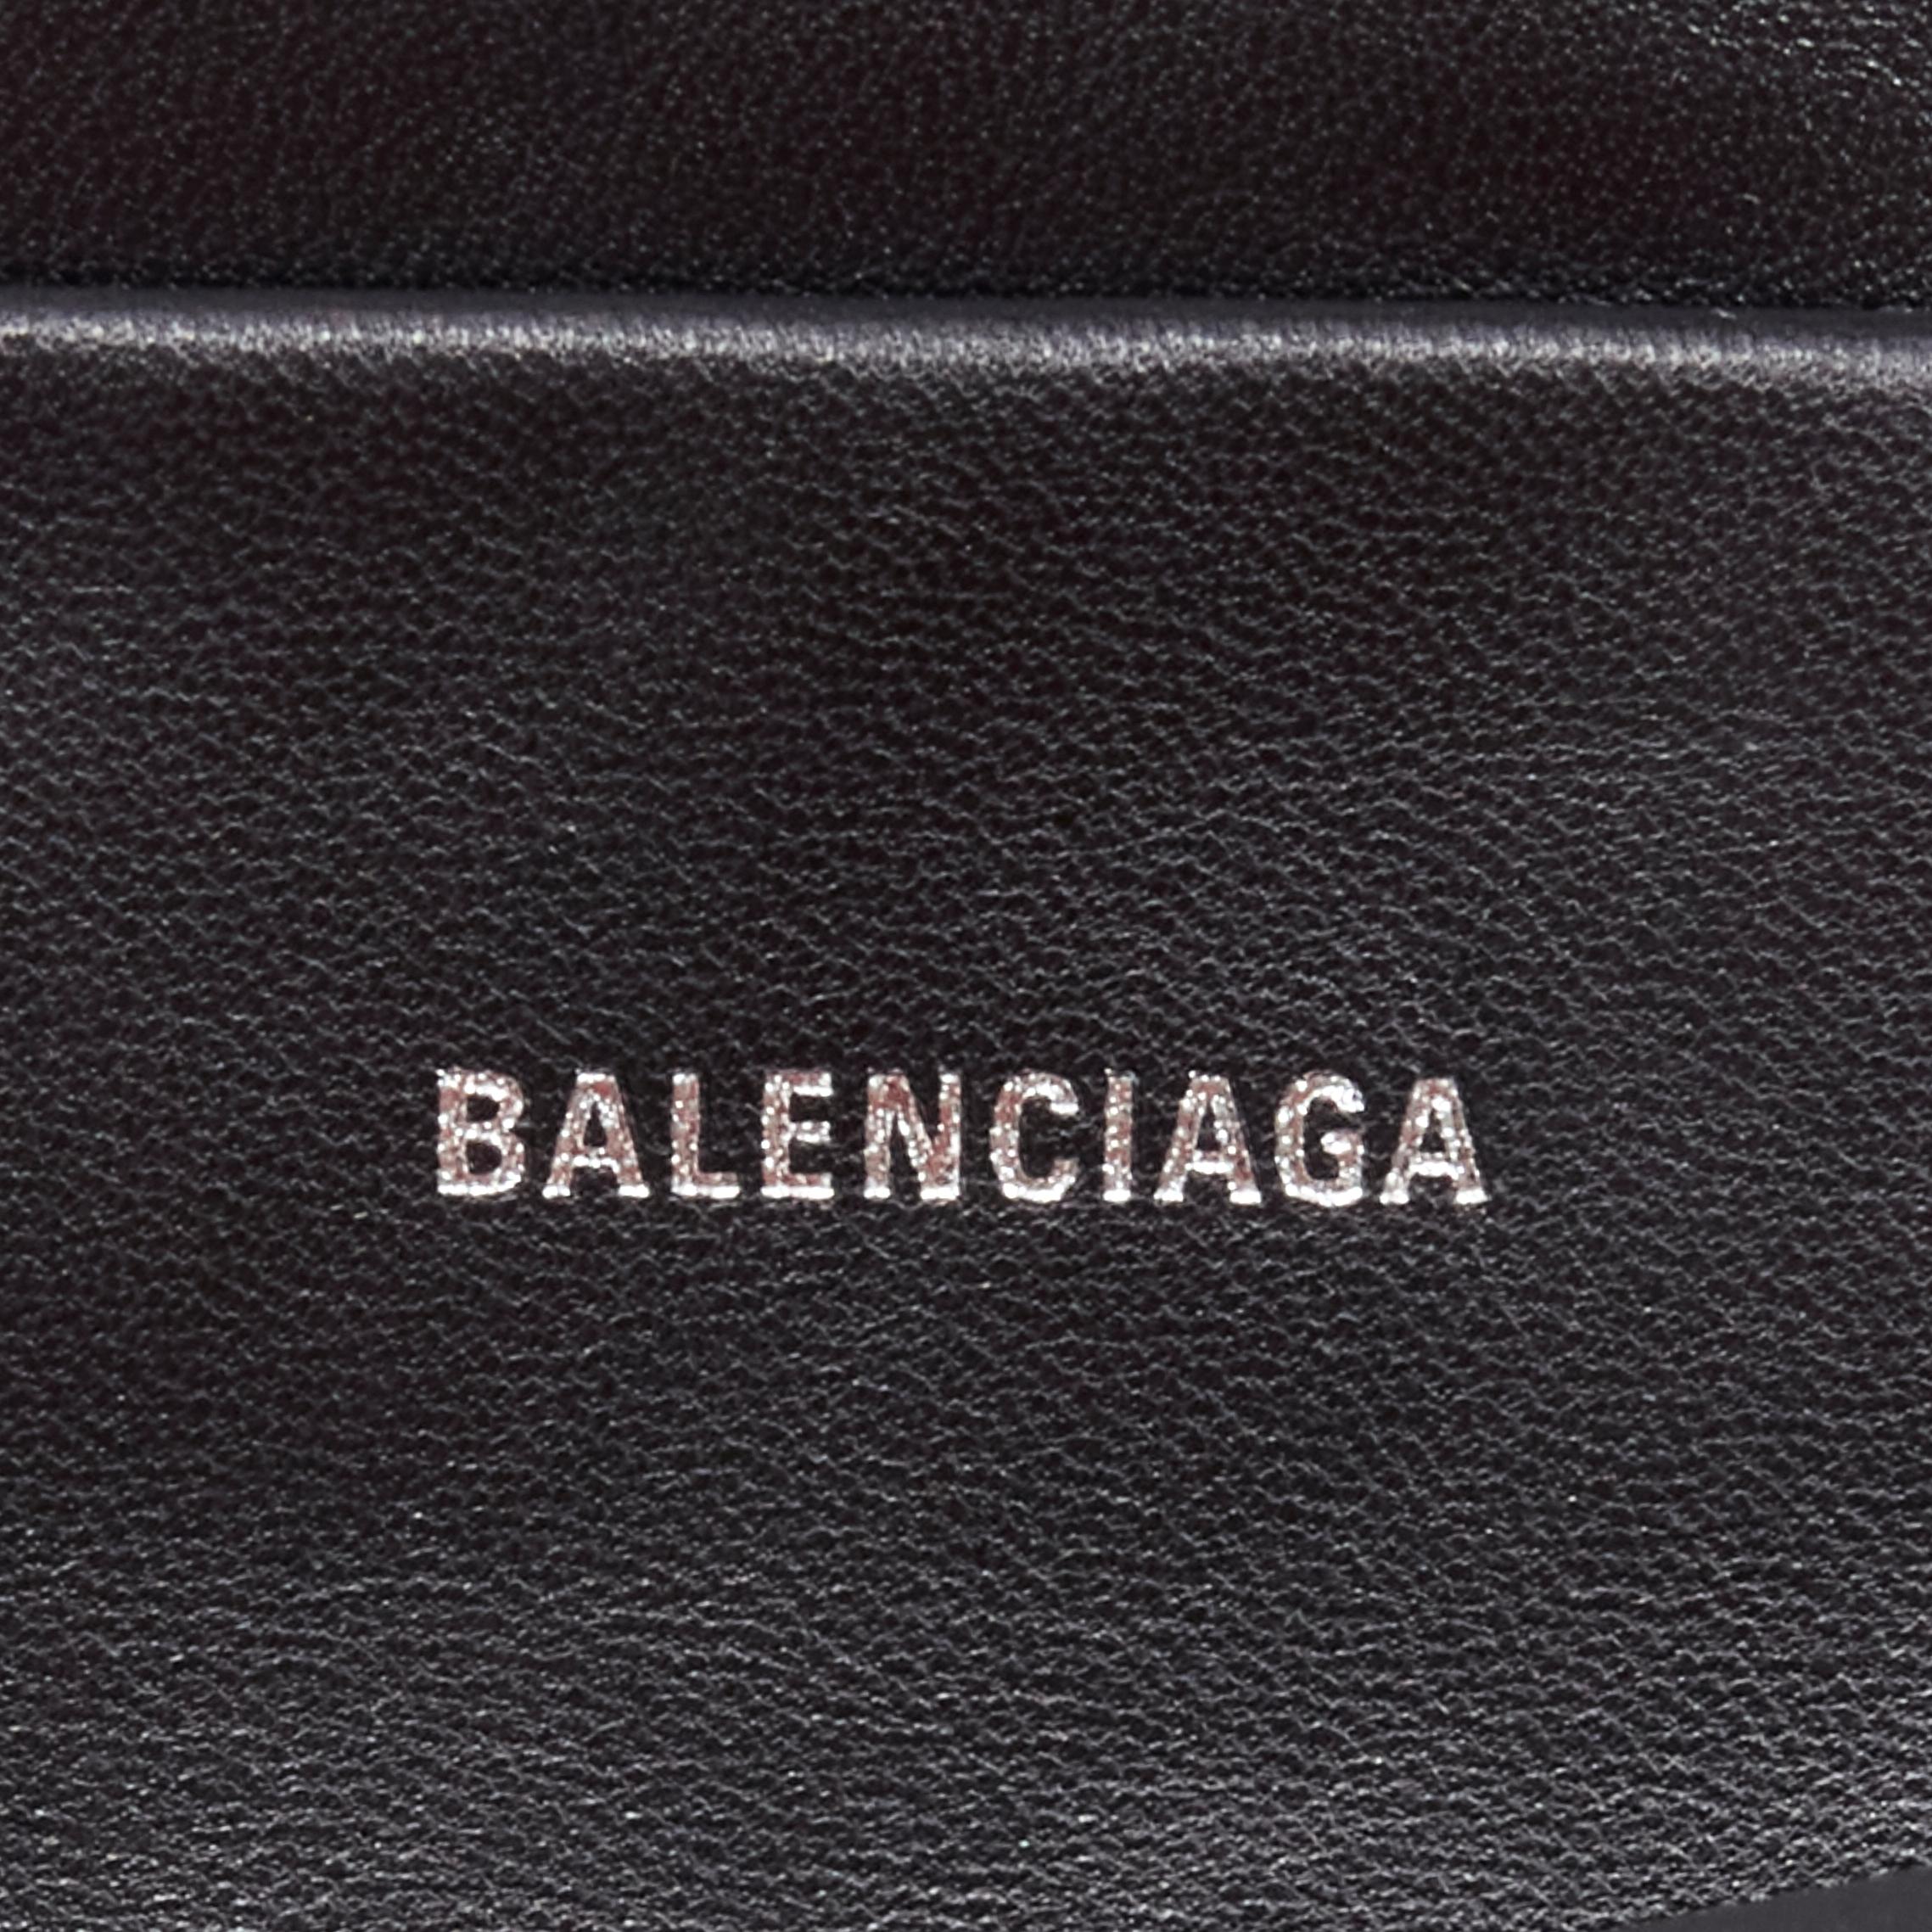 new BALENCIAGA Demna logo print black white merino lamb shearling zip clutch bag 3